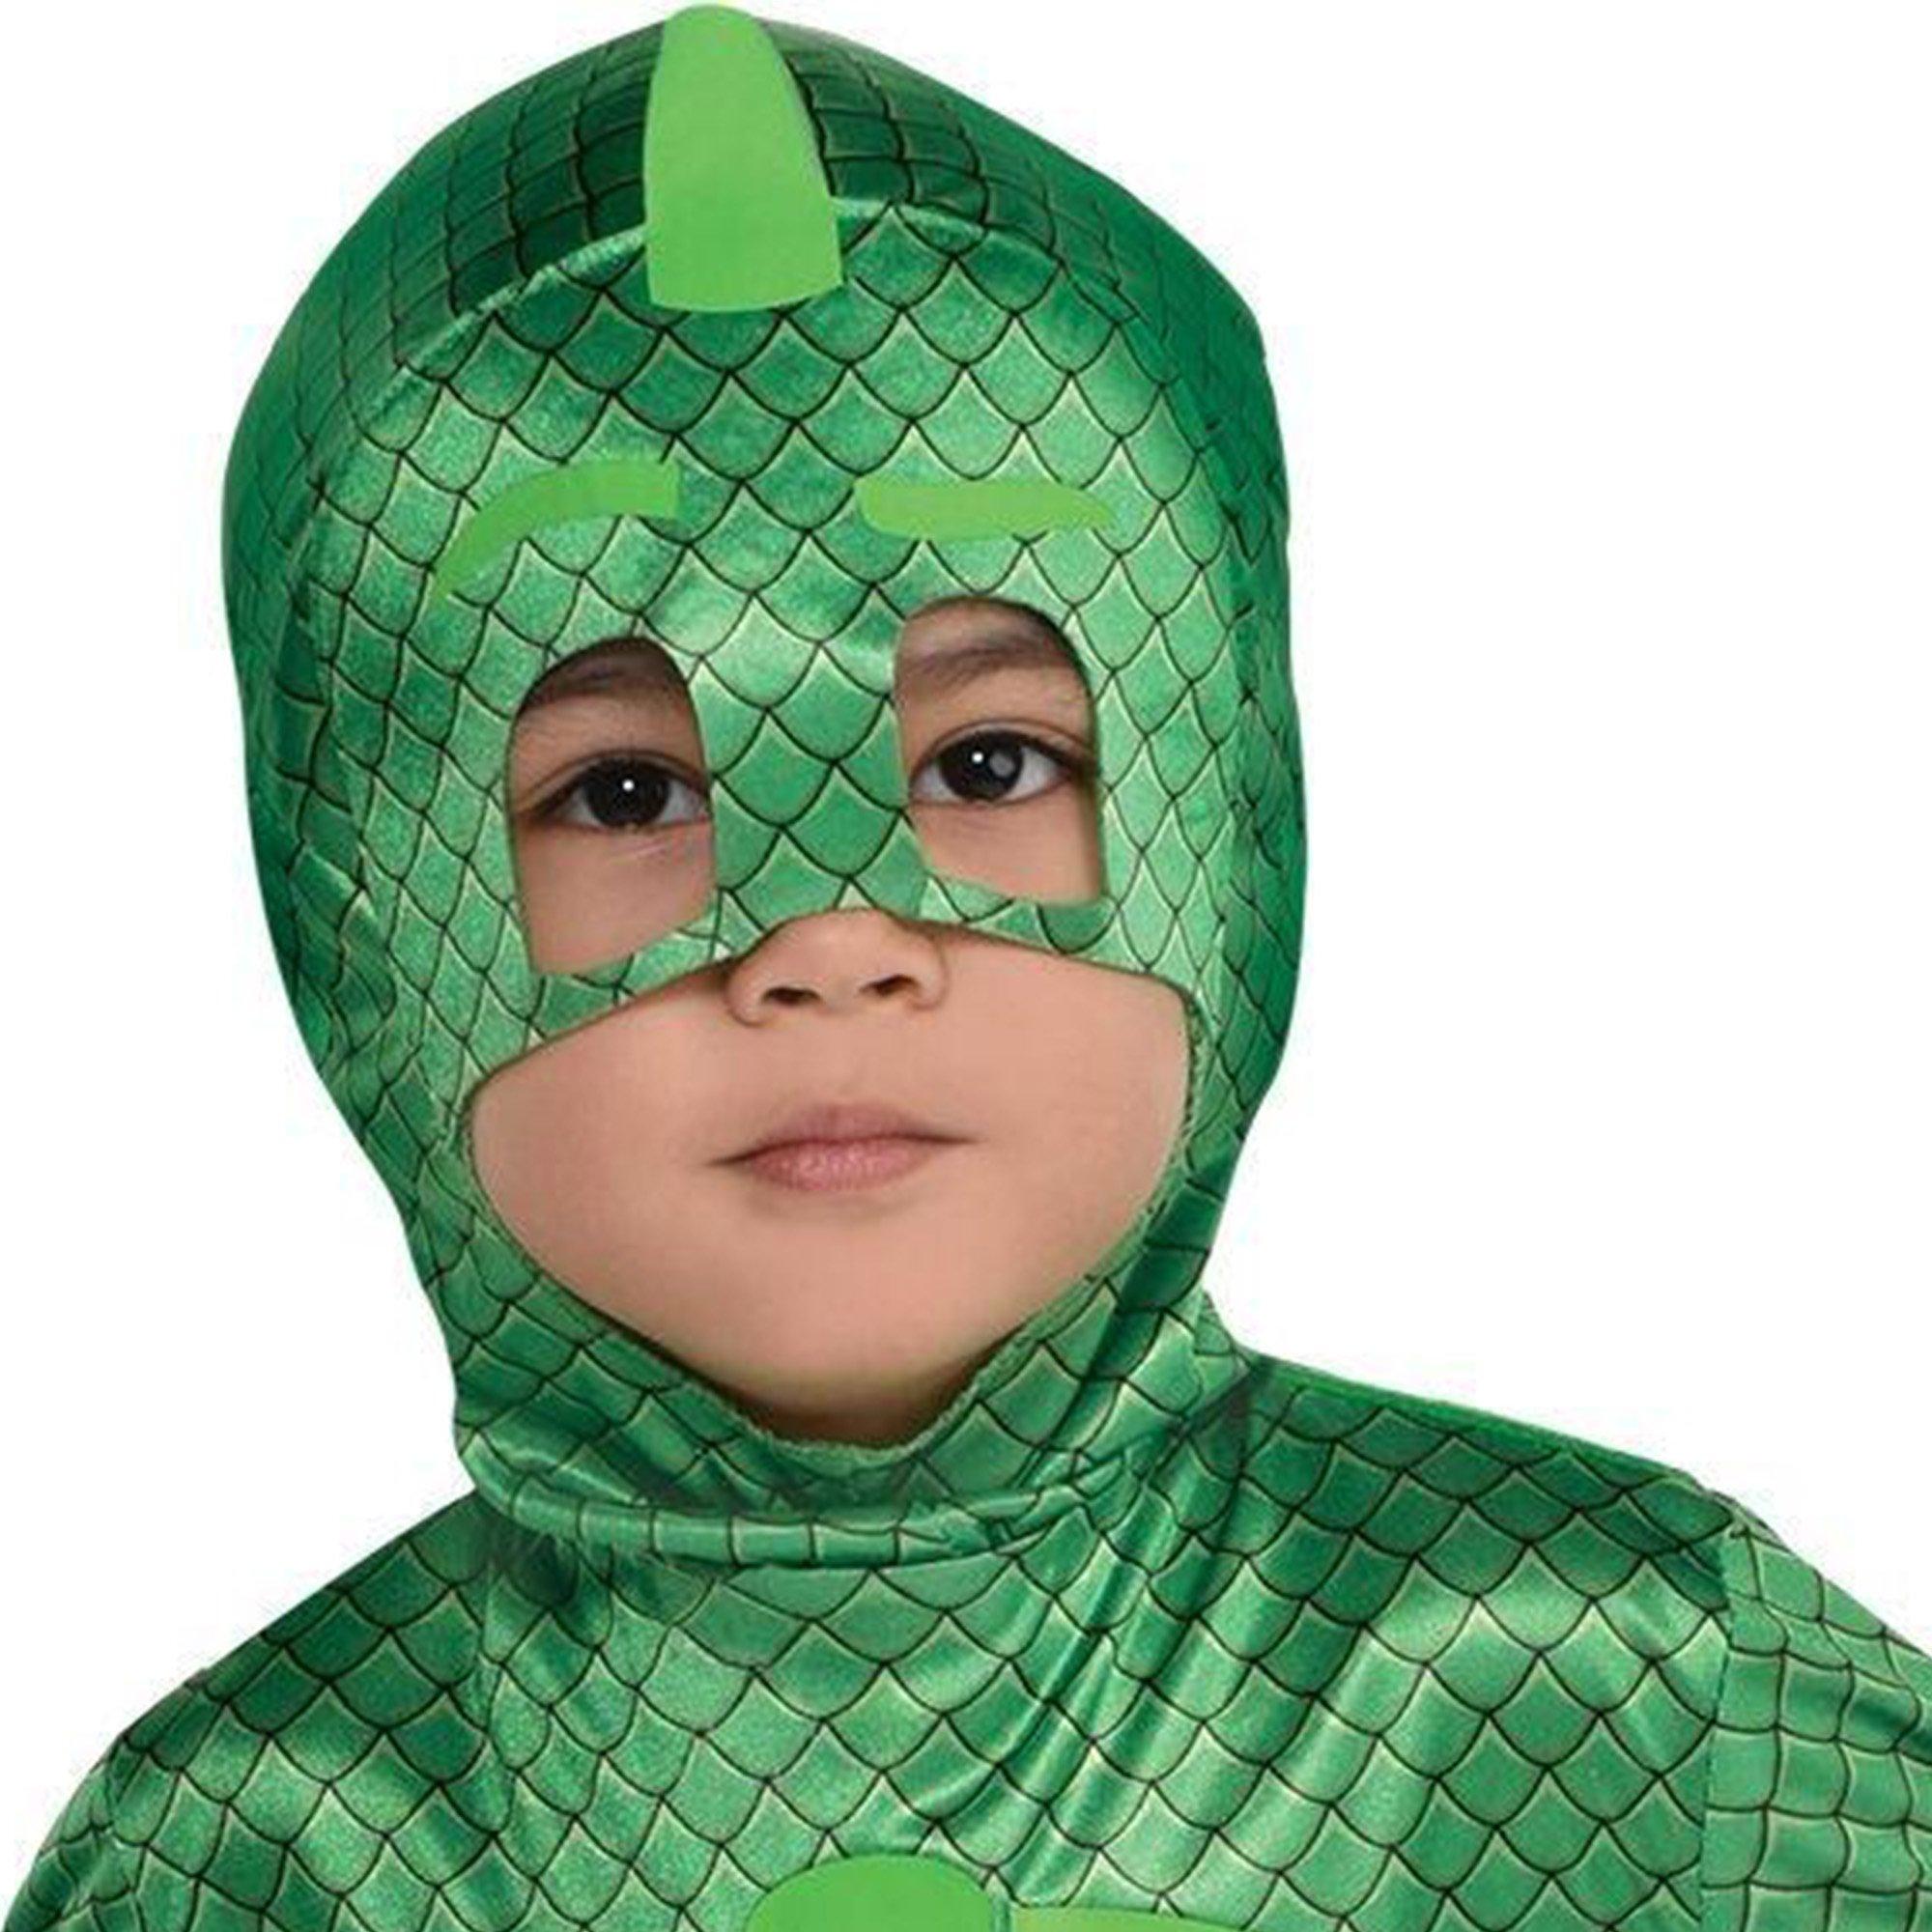 Kids' Gekko Costume - PJ Masks